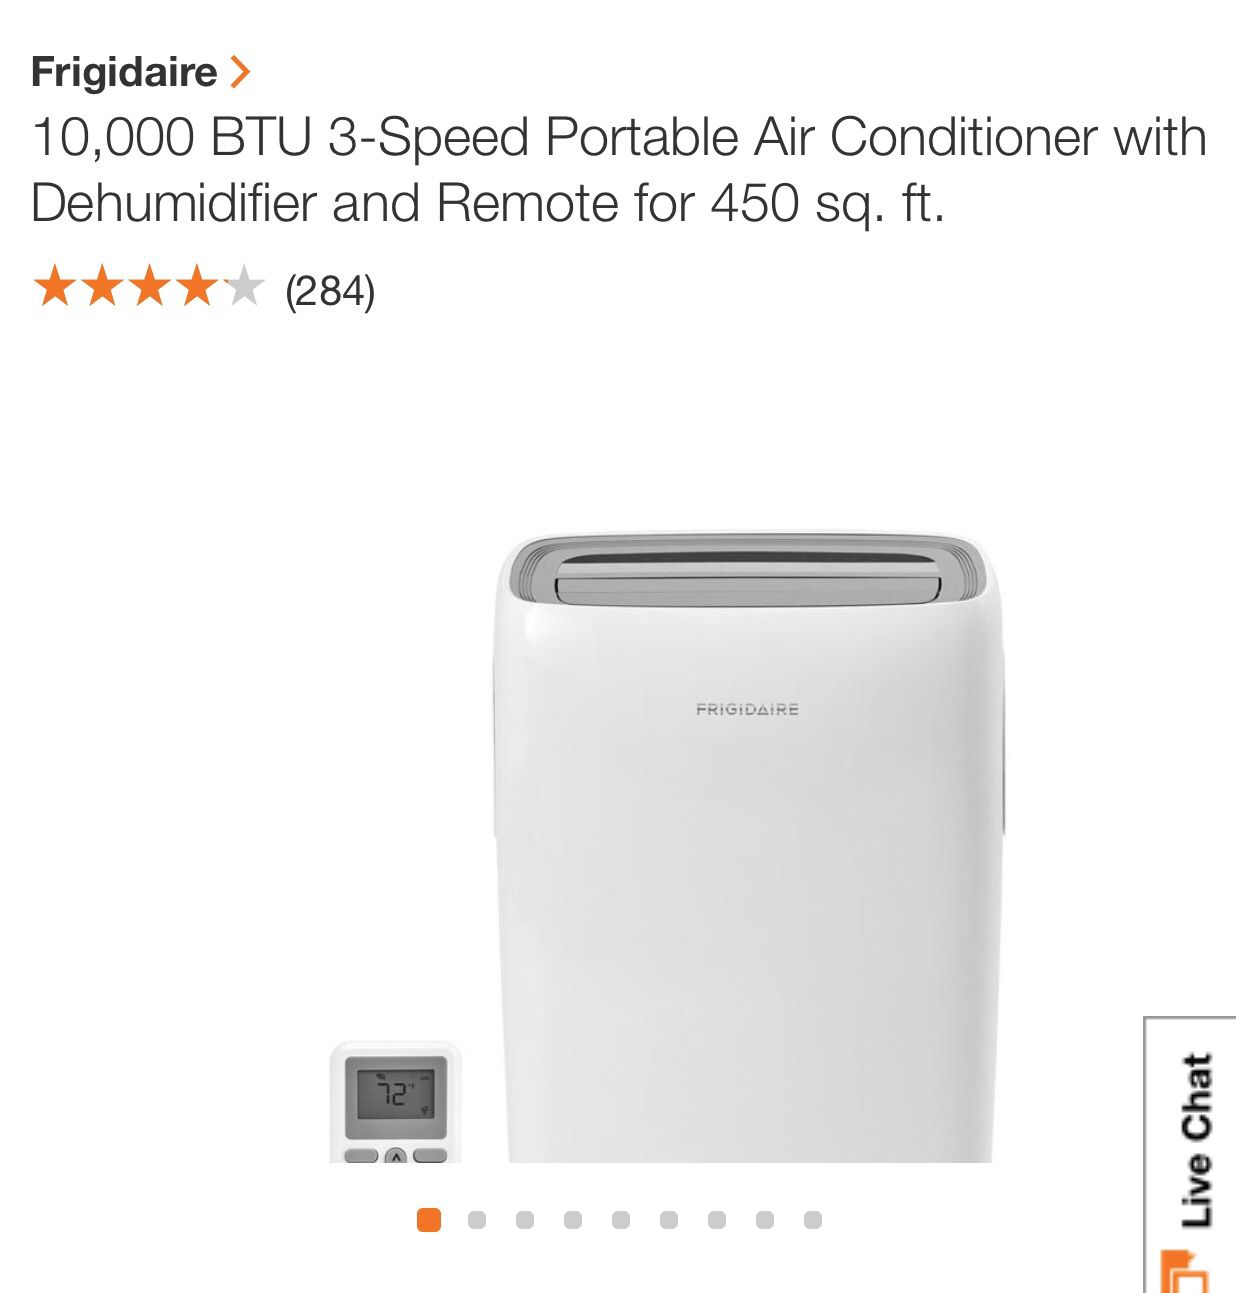 Frigidaire portable air conditioner with dehumidifier